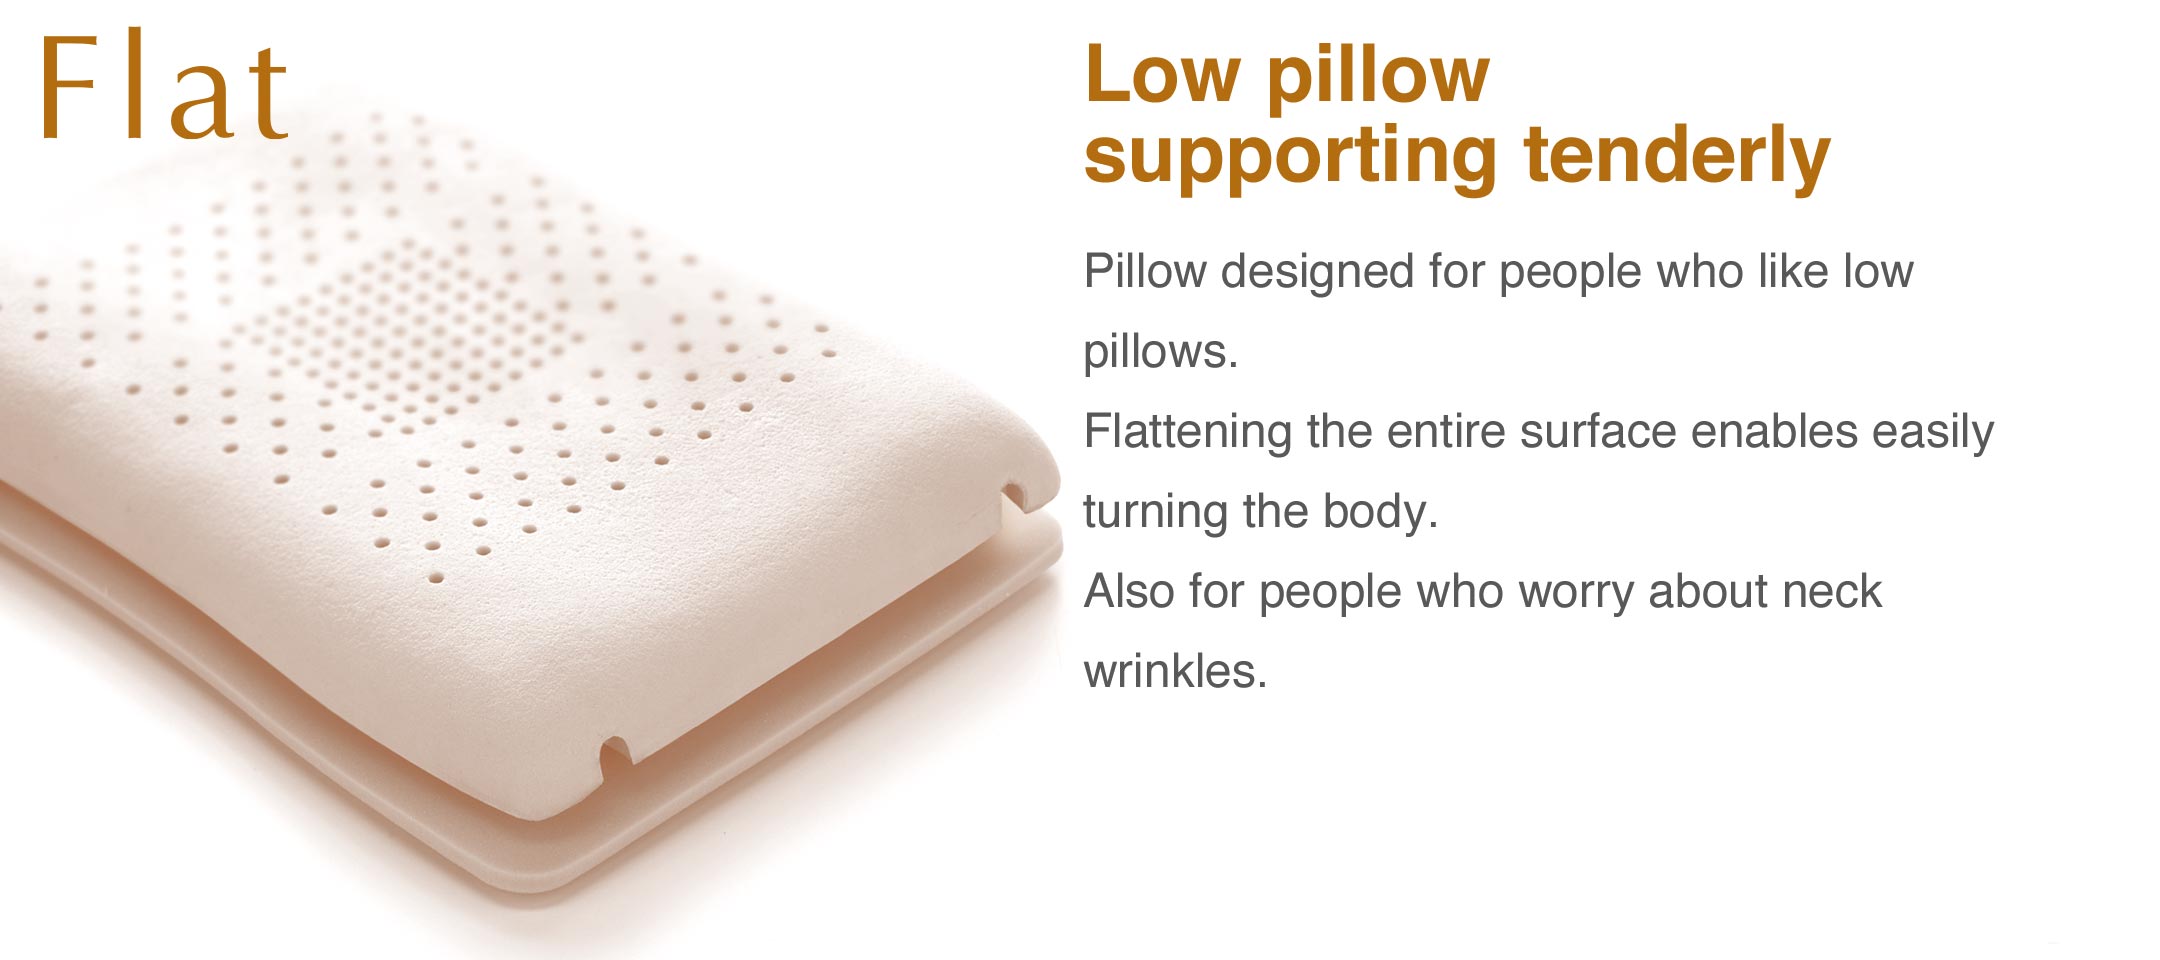 AEROFLOW low-resilience pillow (Flat)